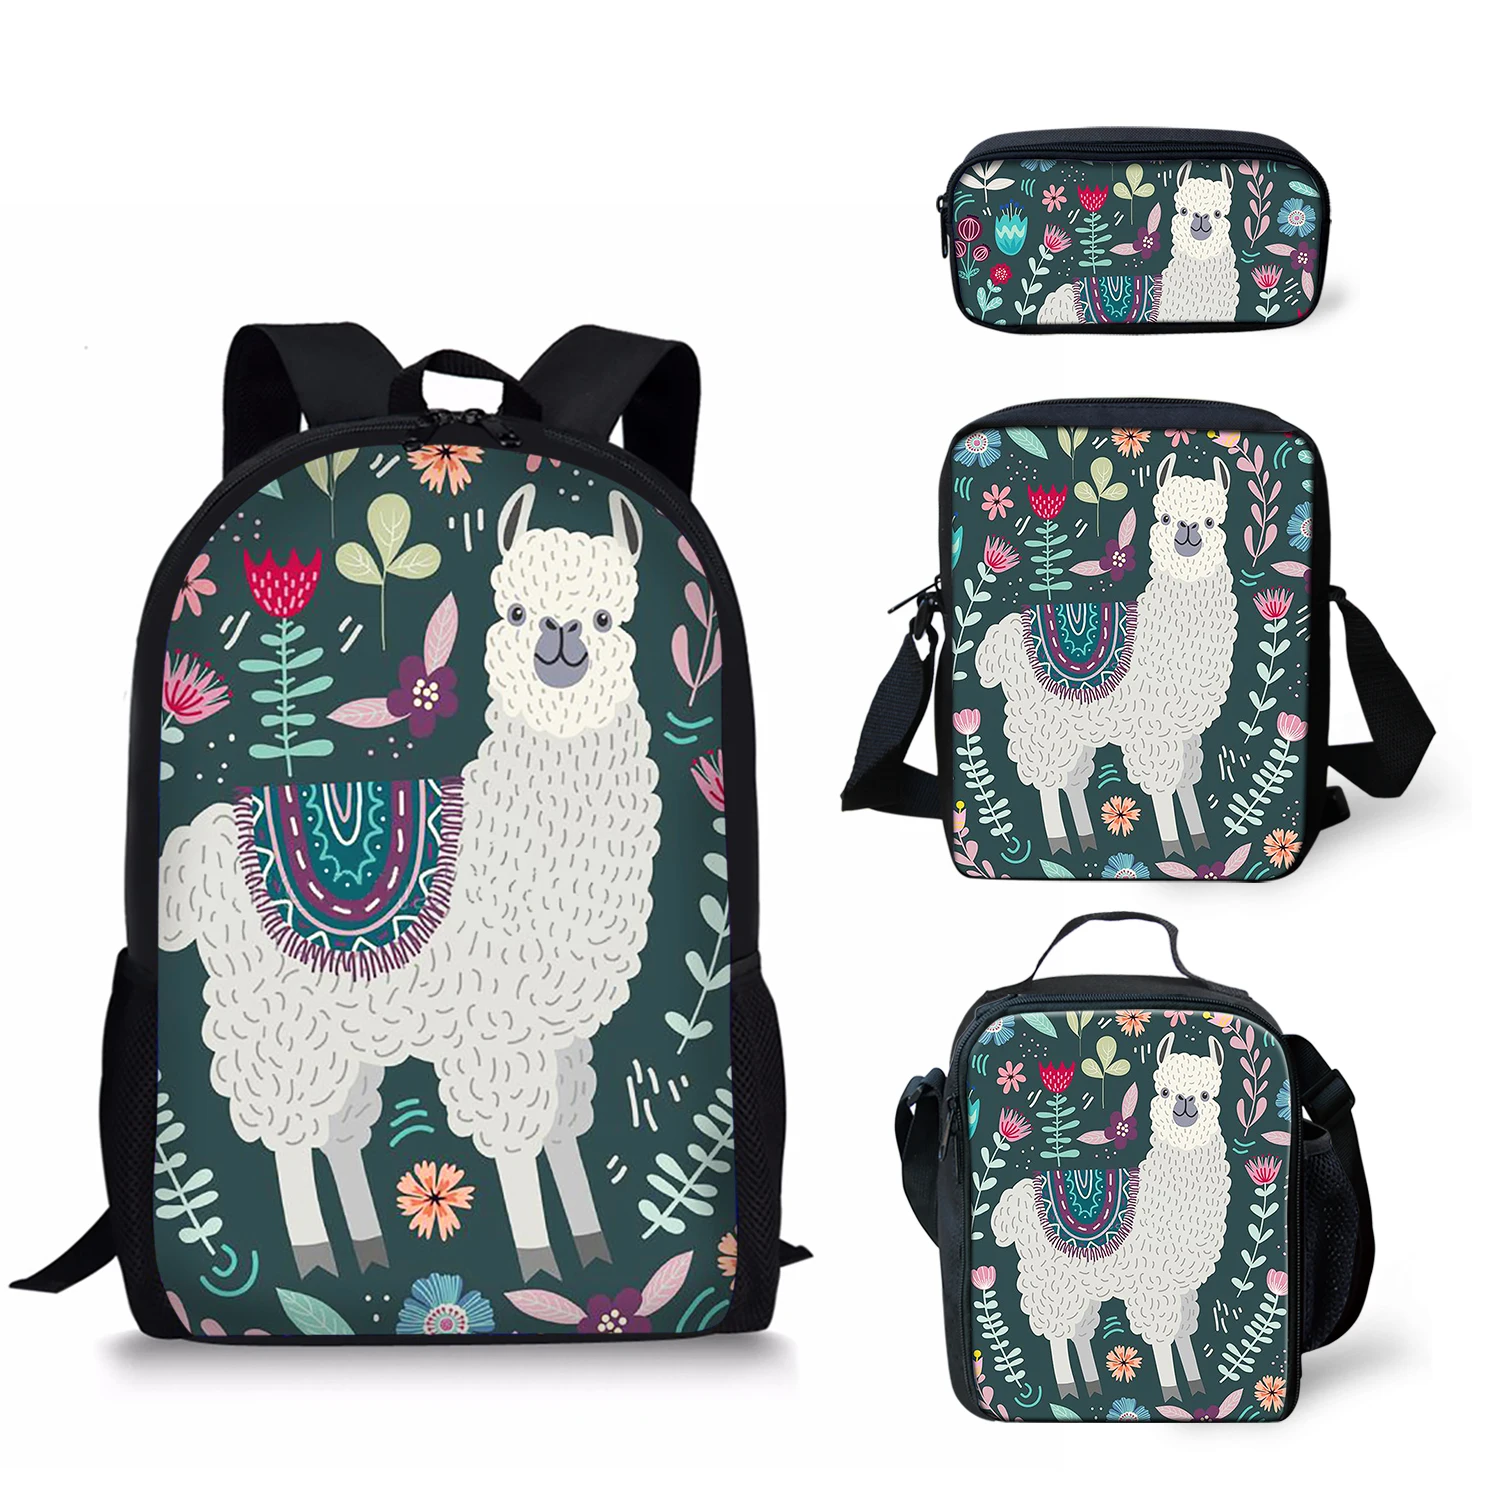 ADVOCATOR Kawaii Alpaca Design Girls School Bags High Quality Students Backpacks 4Pcs/Set Kids Travel Satchel Free Shipping